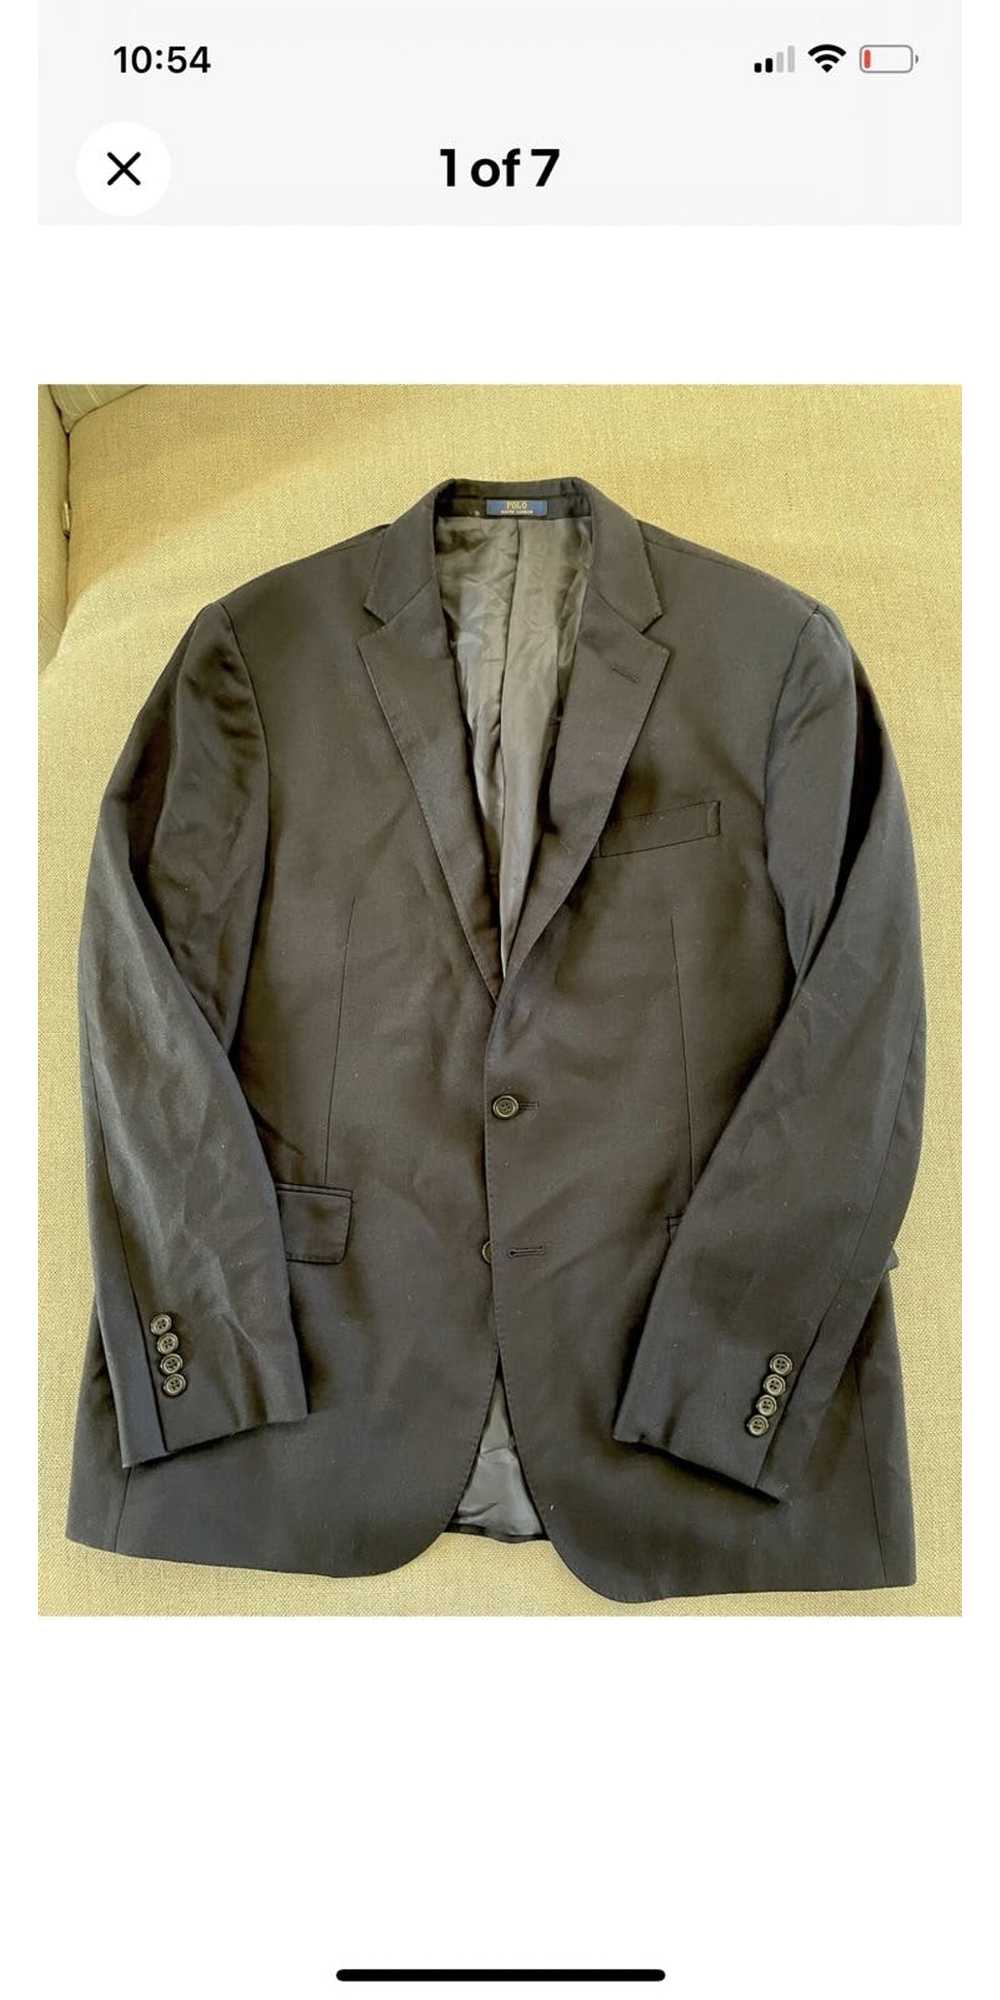 Polo Ralph Lauren The Iconic Navy Jacket - Gem